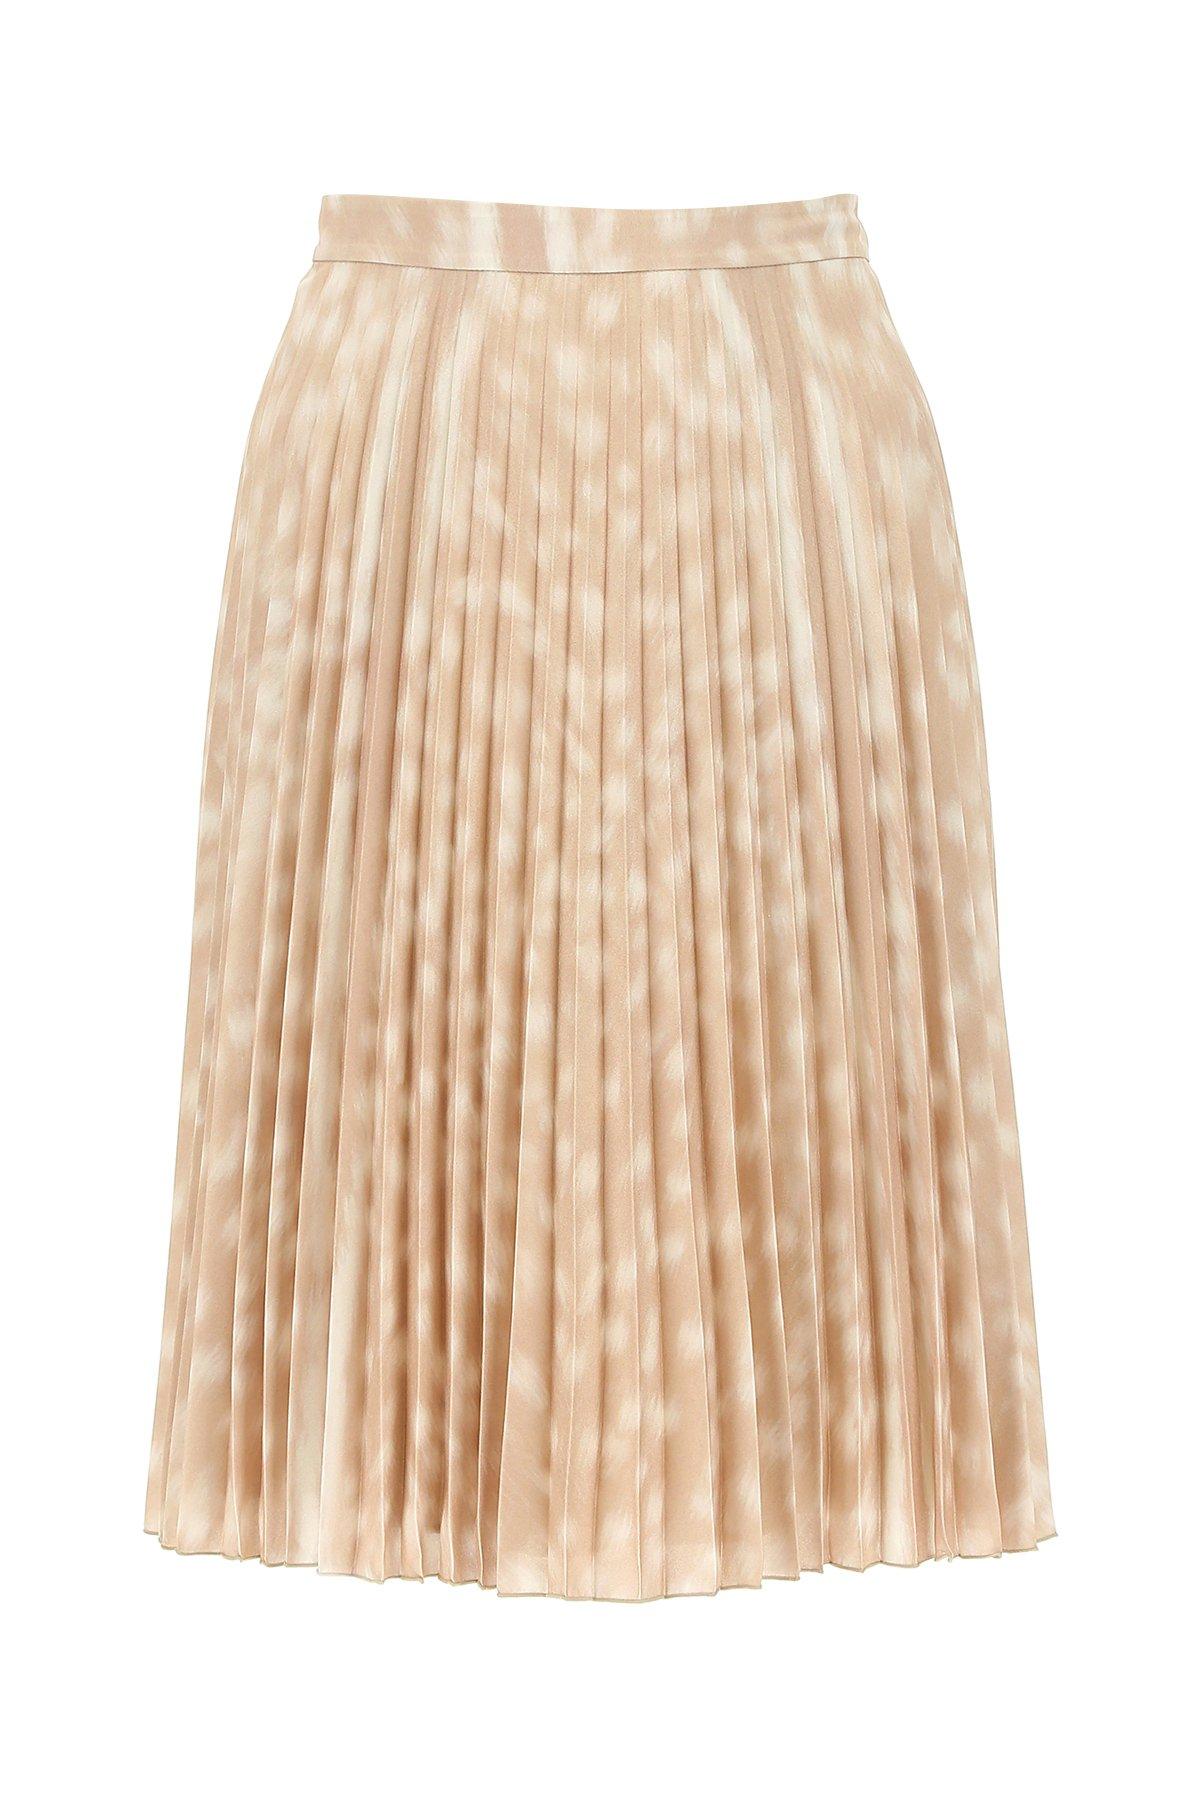 Burberry Silk Deer Print Pleated Skirt in Beige (Natural) - Save 30% - Lyst